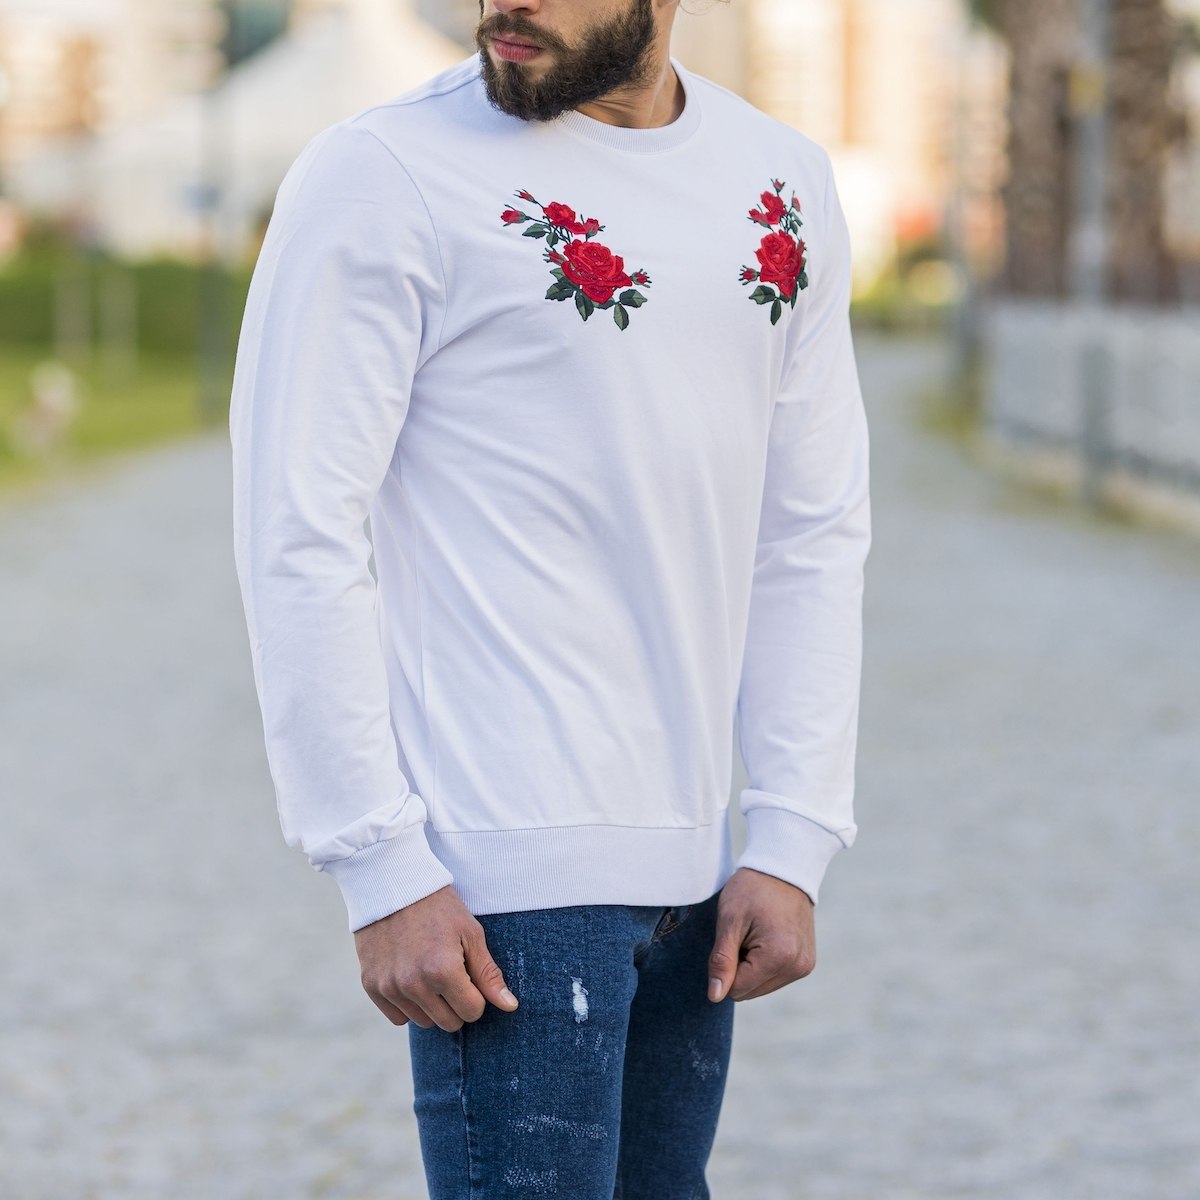 White Sweatshirt With Rose Details - 2